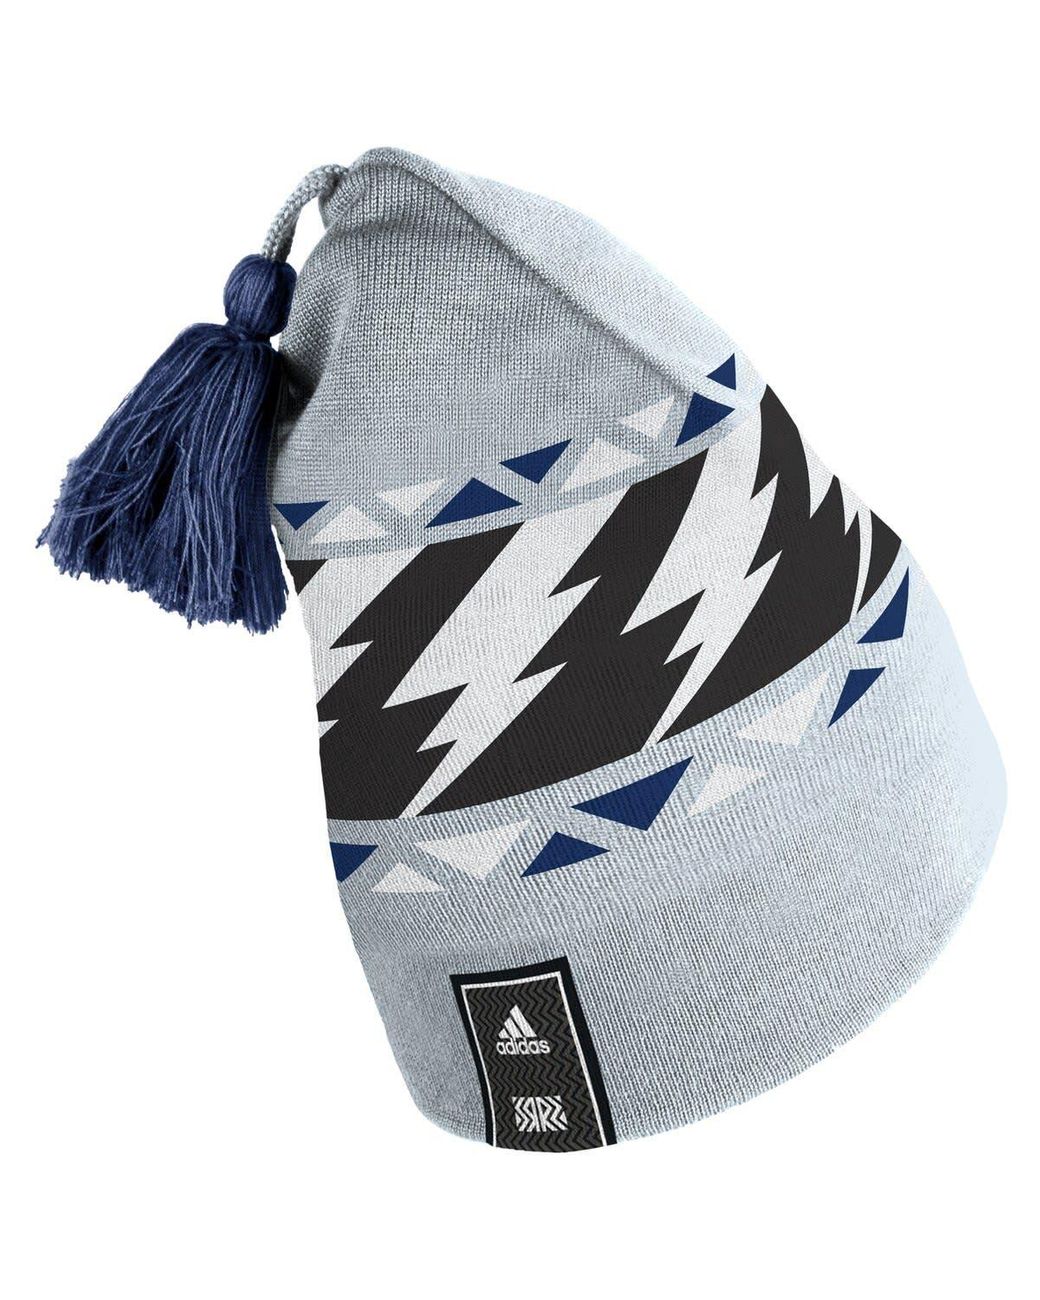 Nashville Predators Reverse Retro Adidas Stretch Hat